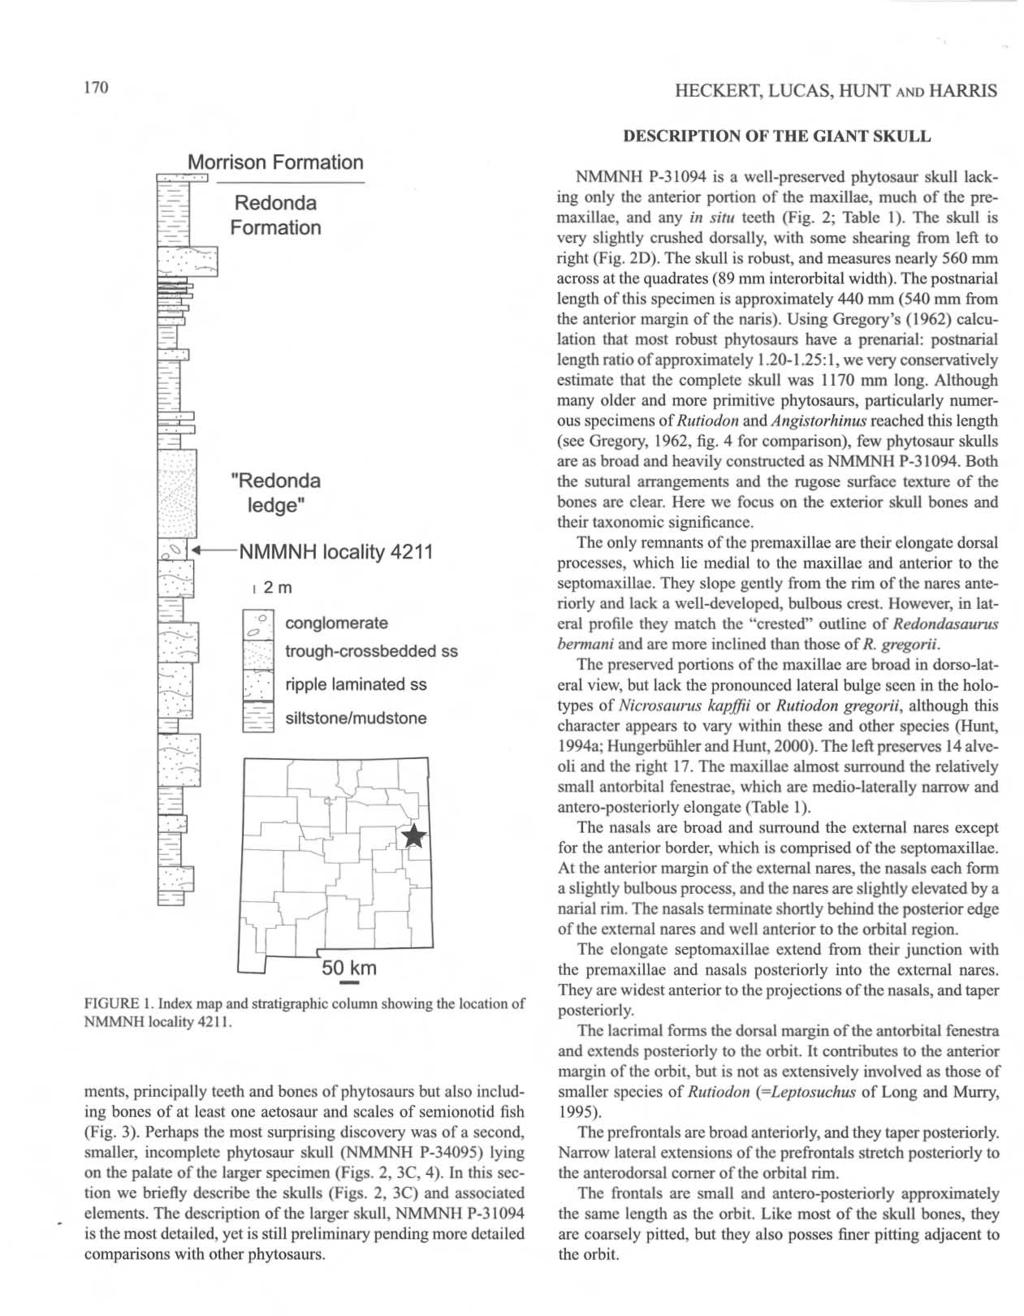 170 ~;;:M50rrison Formation Redonda Formation "Redonda ledge" " - NMMNH locality 4211, 2m o '" conglomerate trough-crossbedded 55 ripple laminated 55 siltstone/mudstone FIGURE 1.